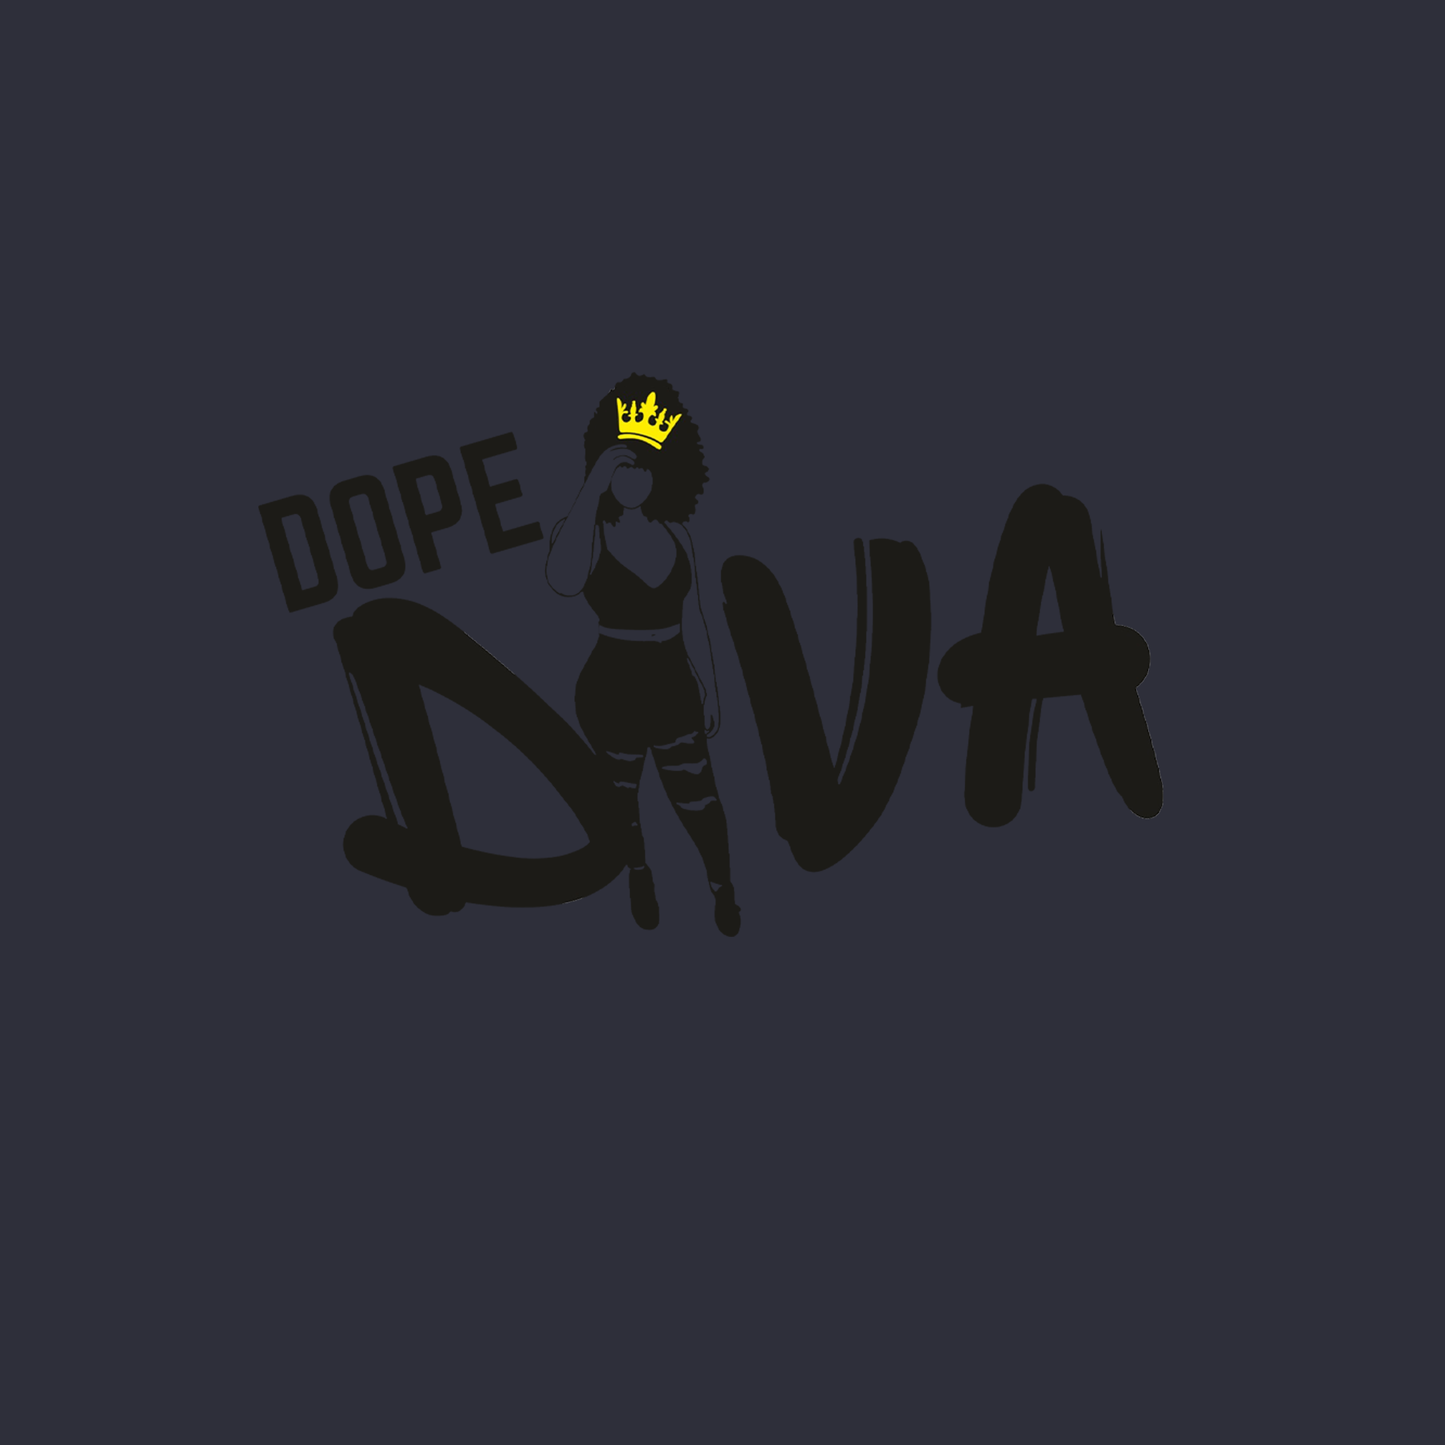 "Dopest Diva" black pop culture tank top